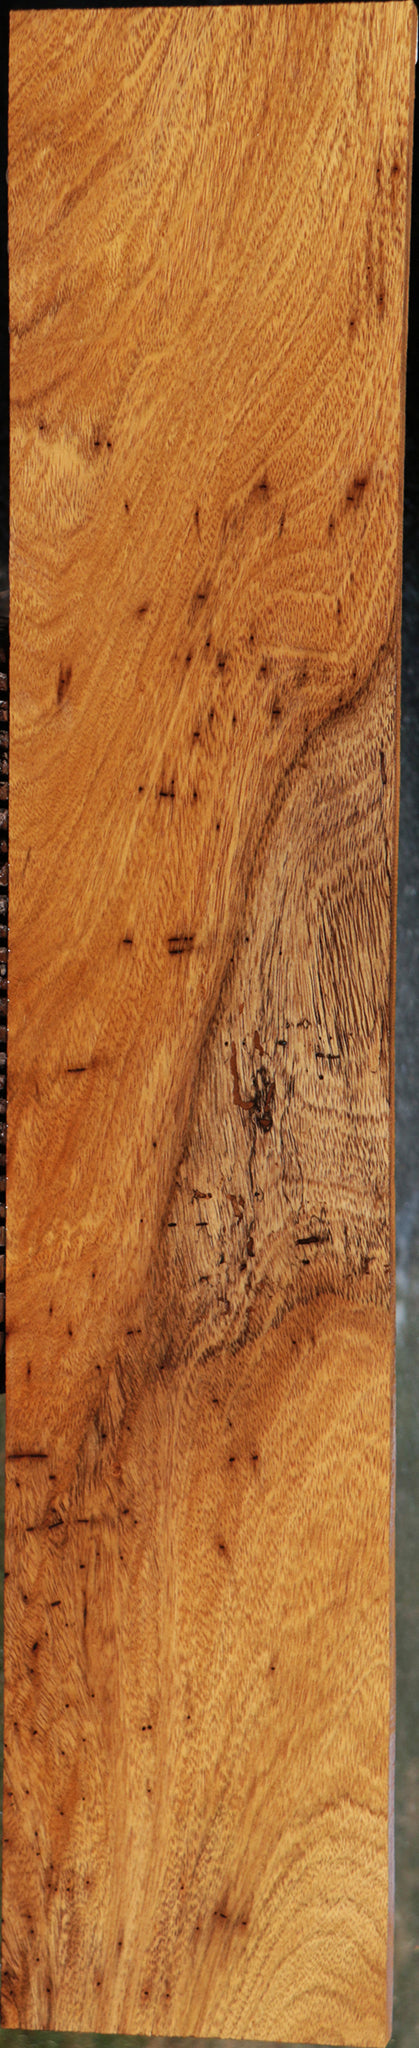 Extra Fancy Figured Cerejeira Lumber